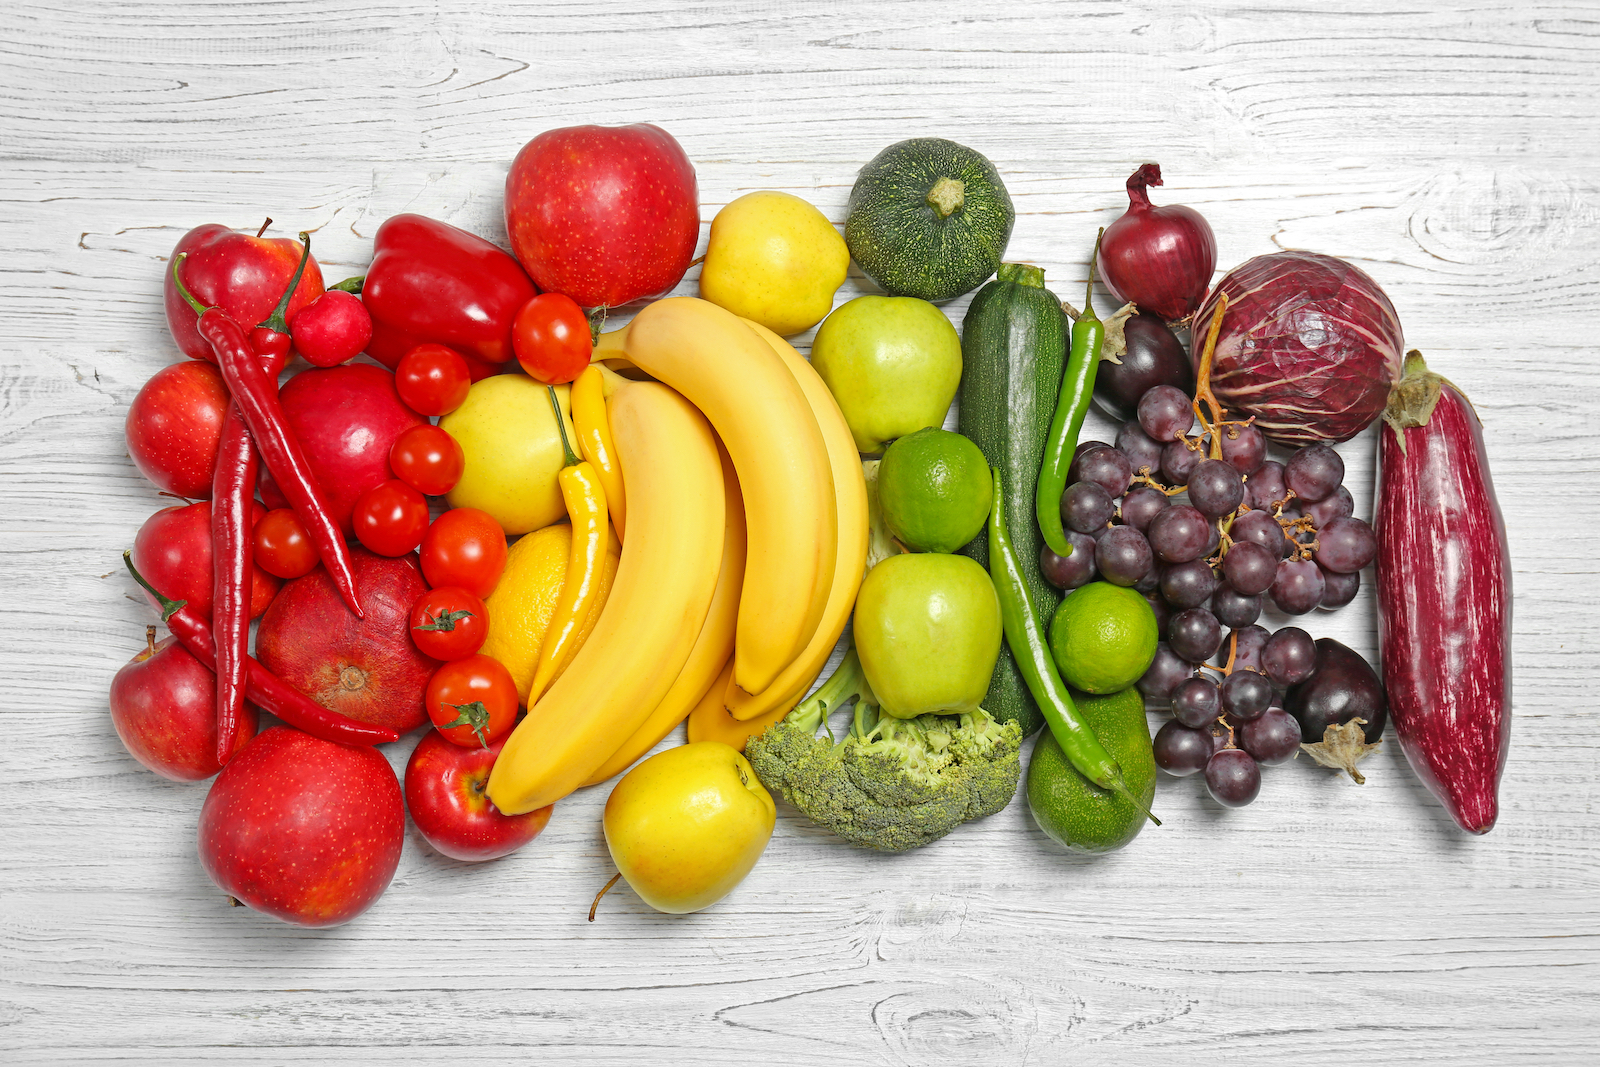 https://thepaleodiet.com/wp-content/uploads/2011/03/rainbow-fruits-and-vegetables.jpg